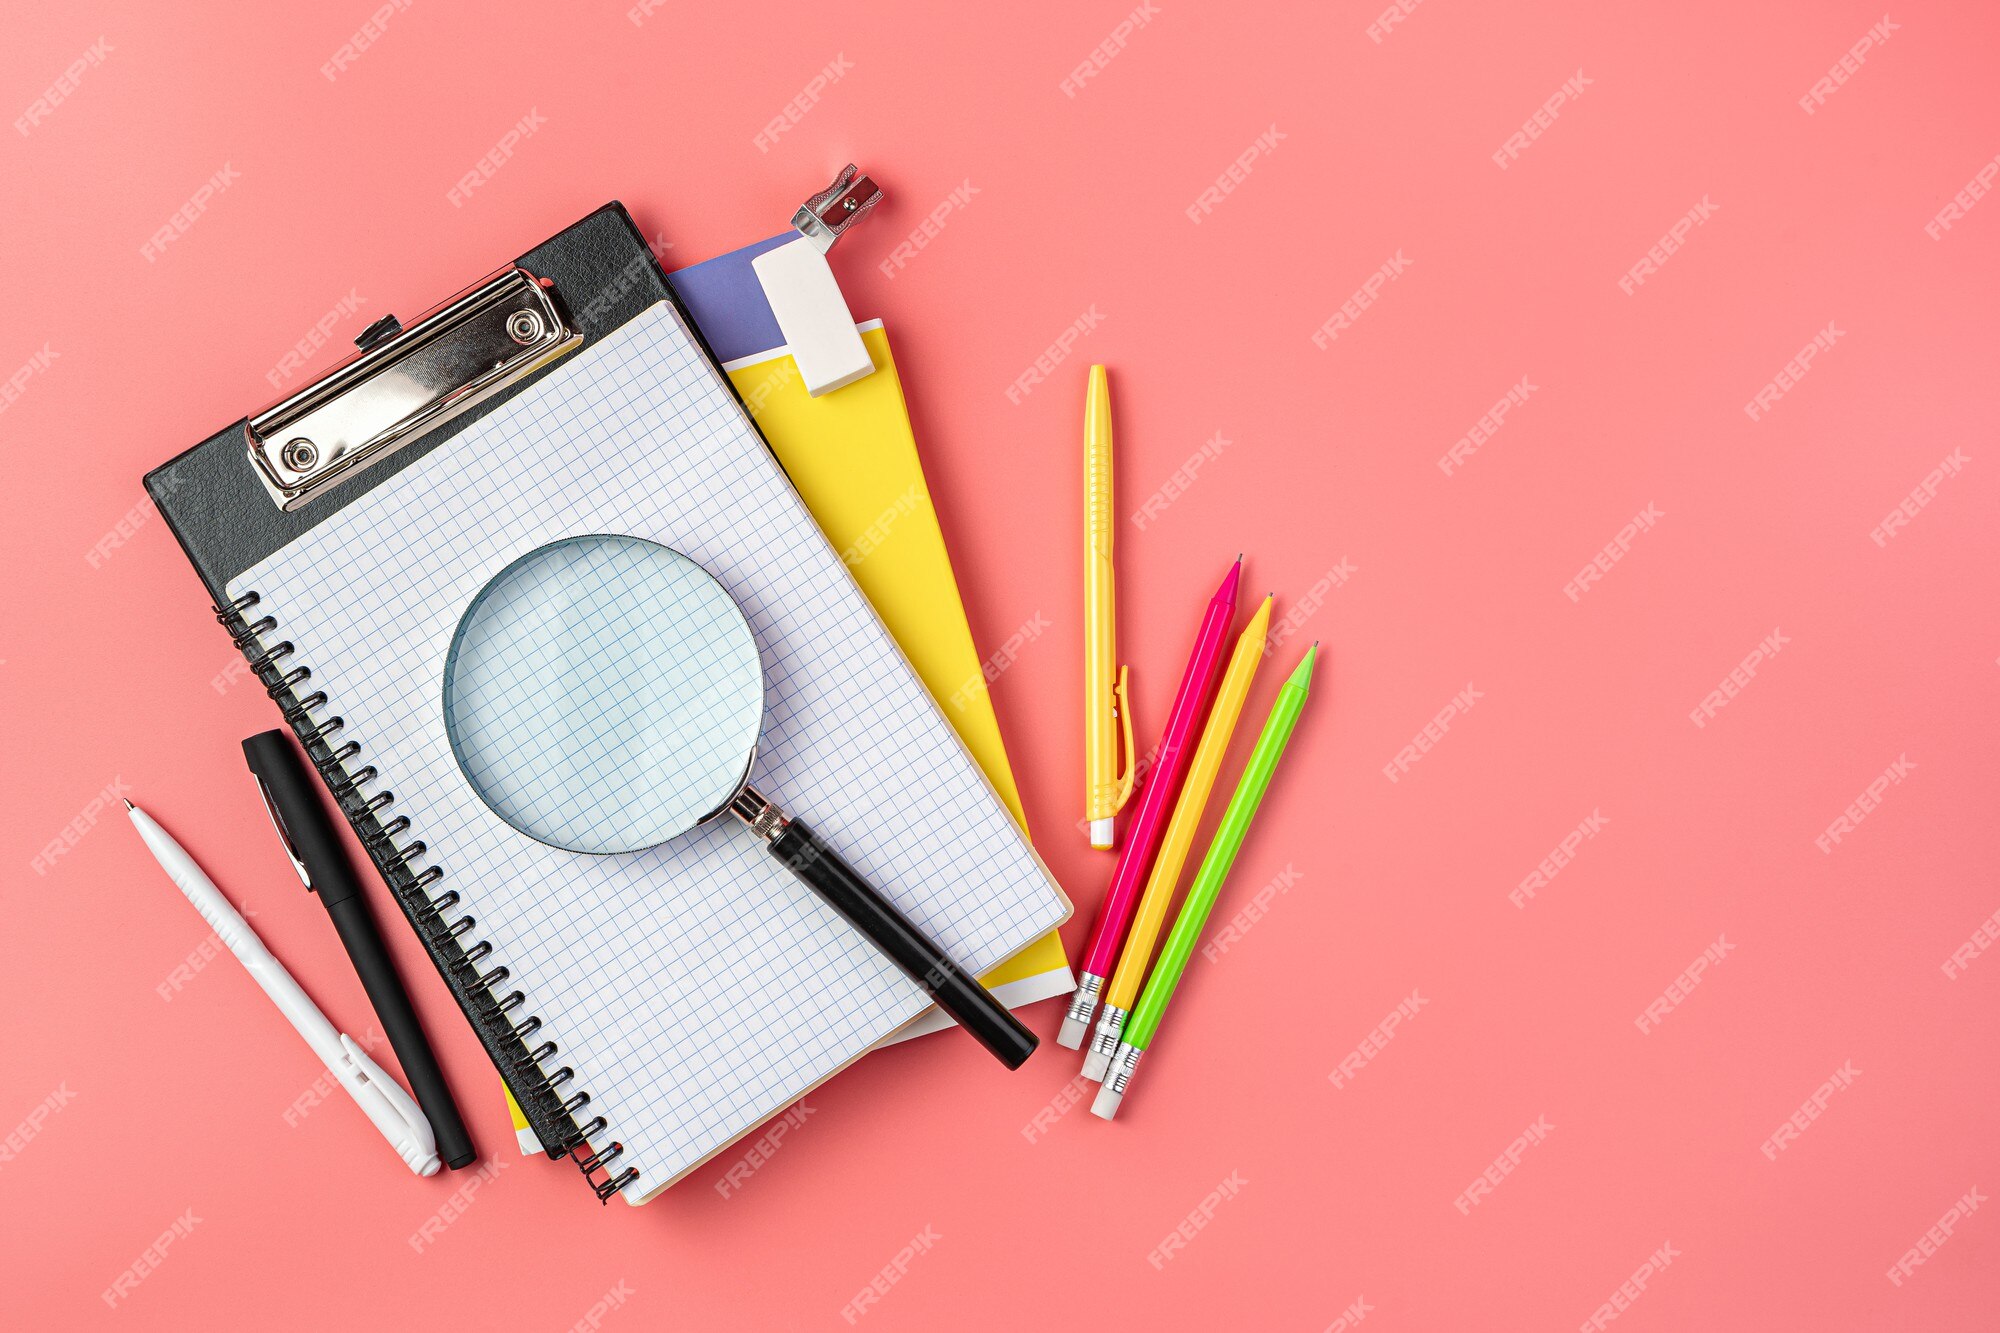 Premium Photo  School supplies with notebook on pink background